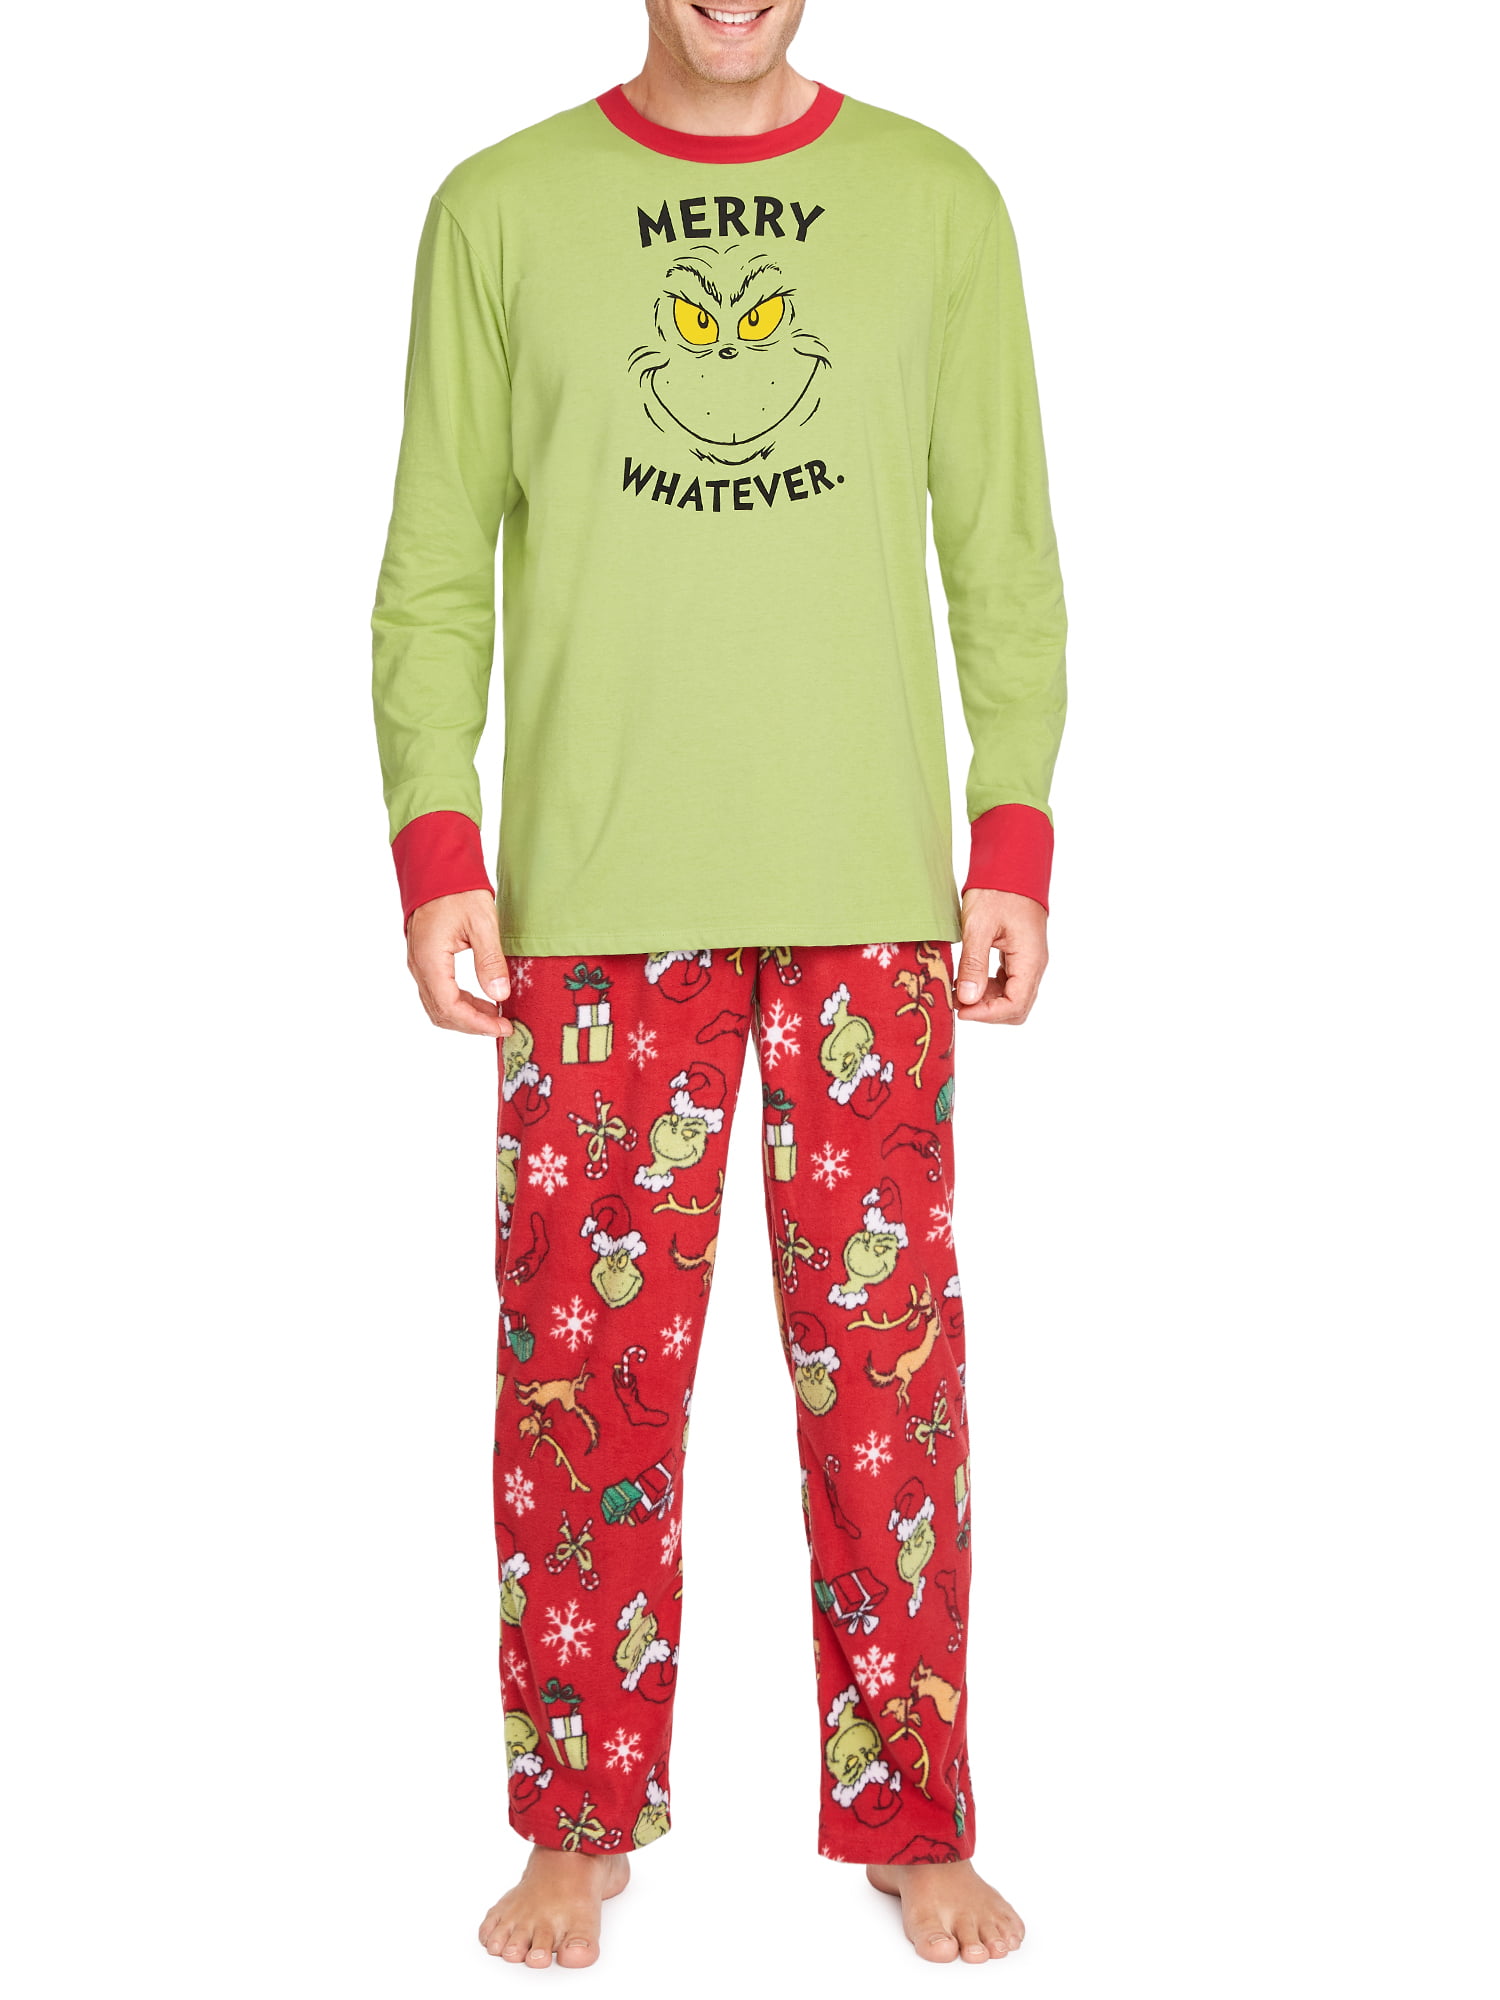 Shirts and Shorts Boys' Summer Pyjamas Cartoon Suit Fashion Tops Aatensou The Grinch Children's T-Shirts 2 Sets